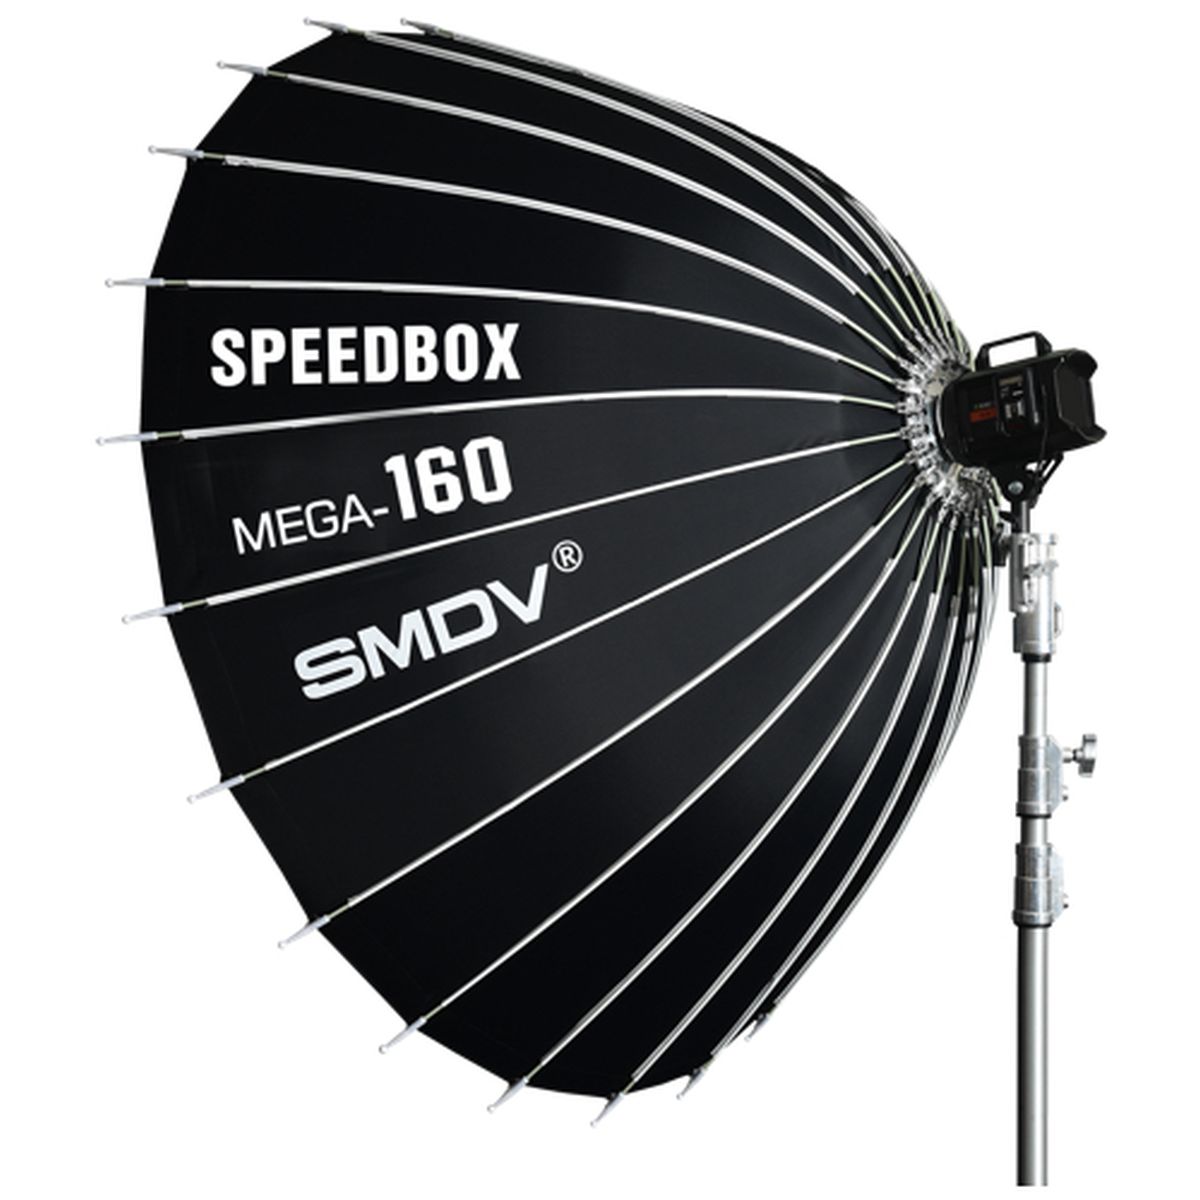 SMDV Speedbox Mega-160 Deep Softbox 160cm Wide Silver Bowens Mount